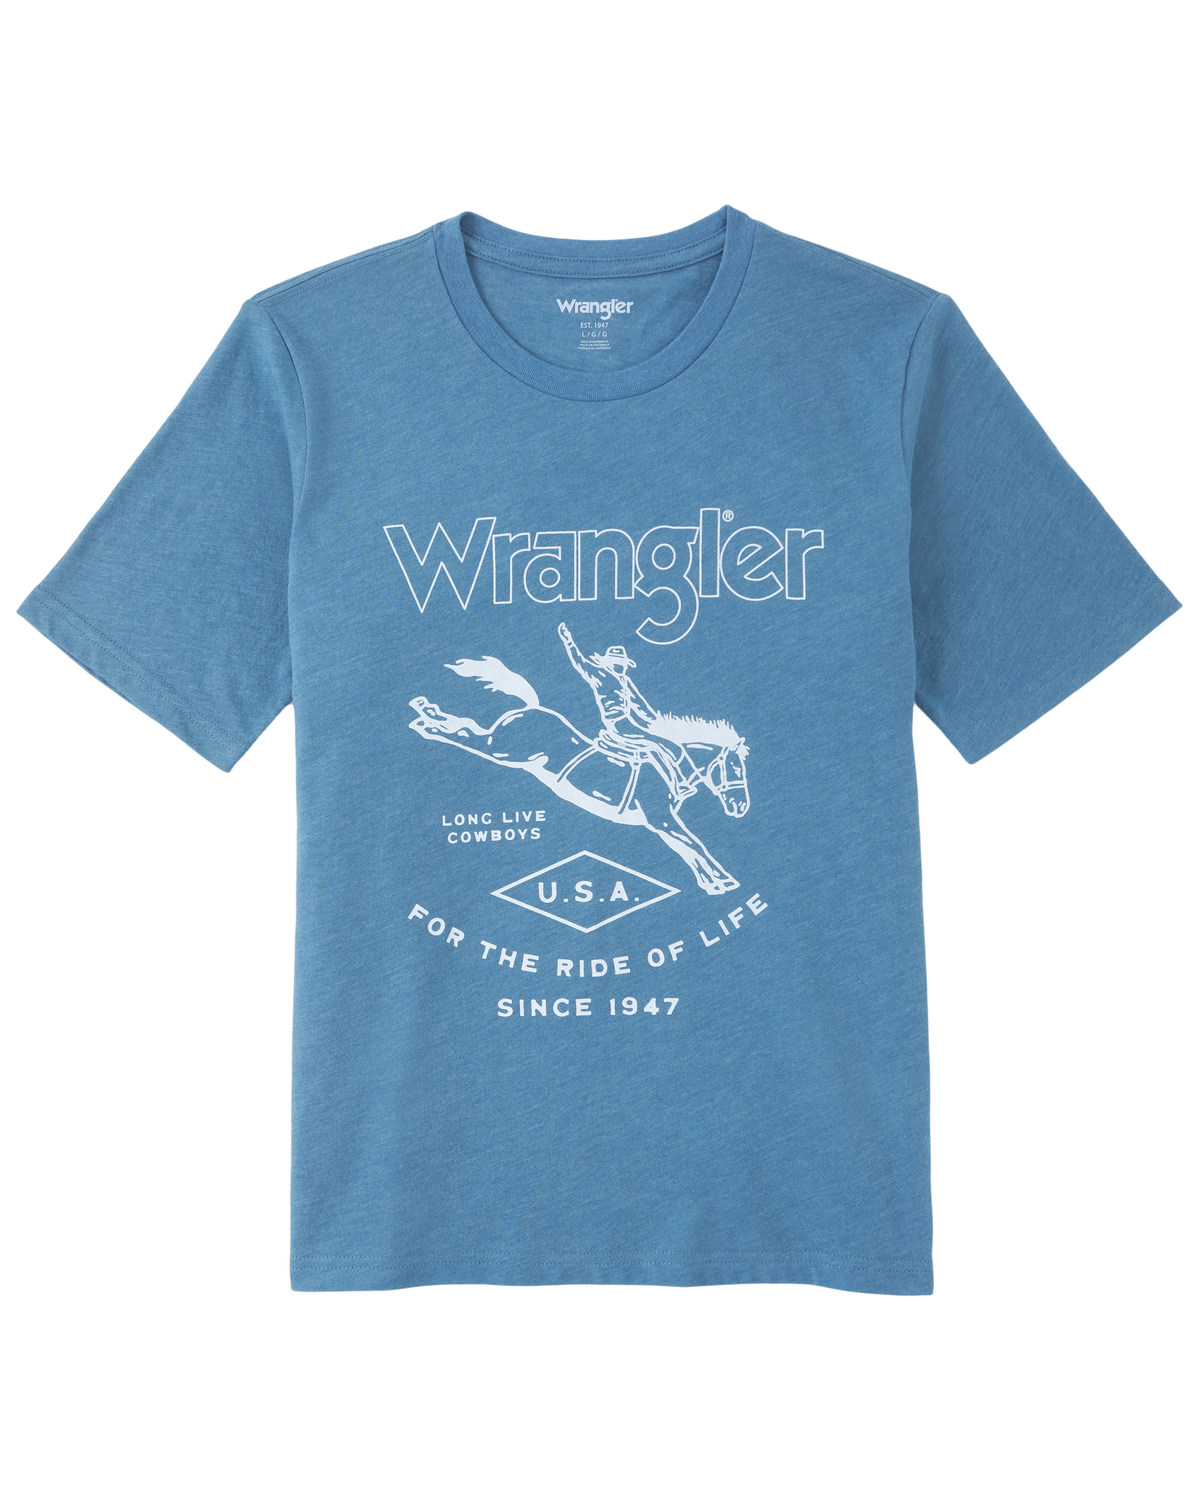 Wrangler Boys' Ride Of Life Short Sleeve Graphic T-Shirt